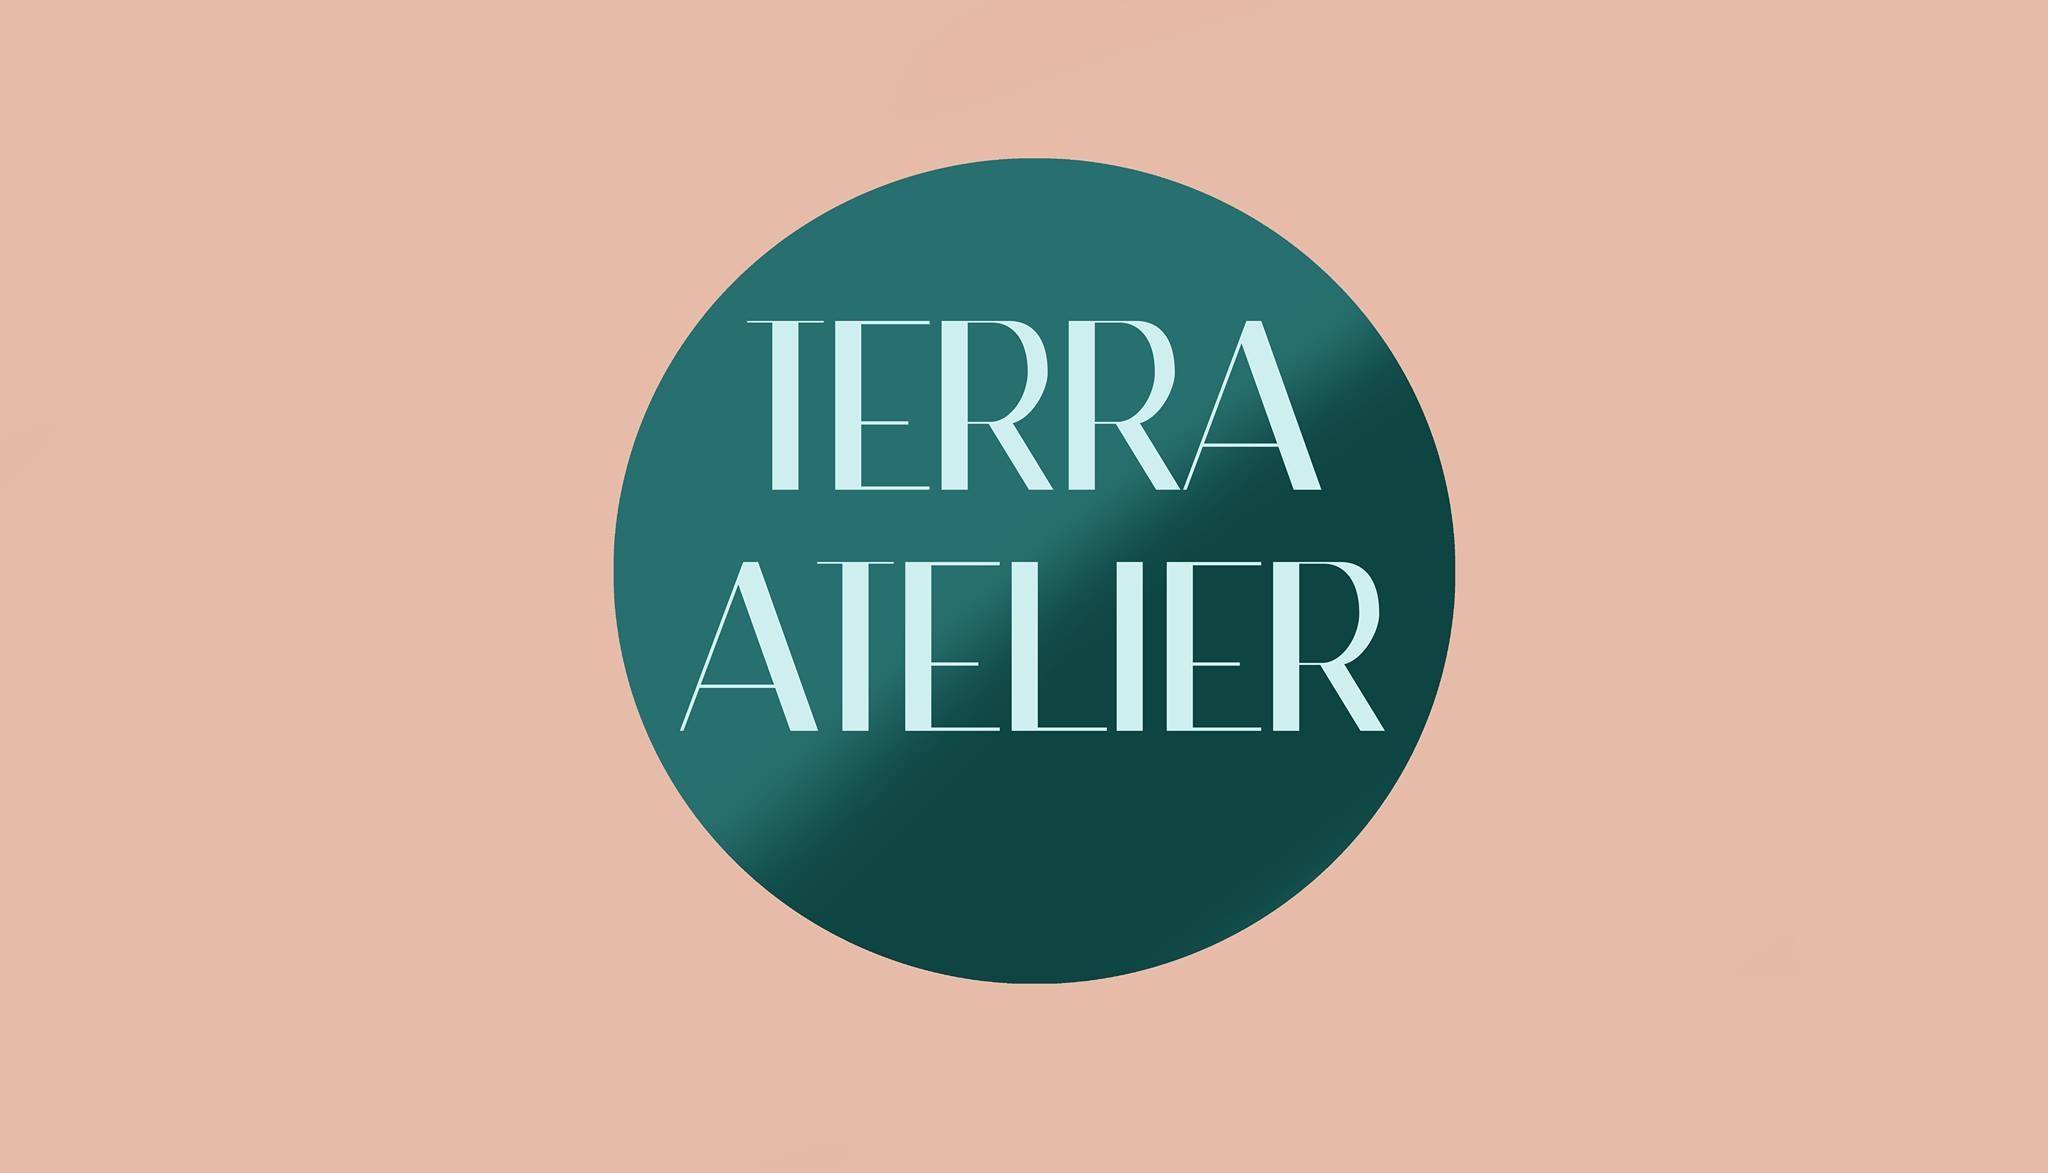 Terra Atelier - Logo